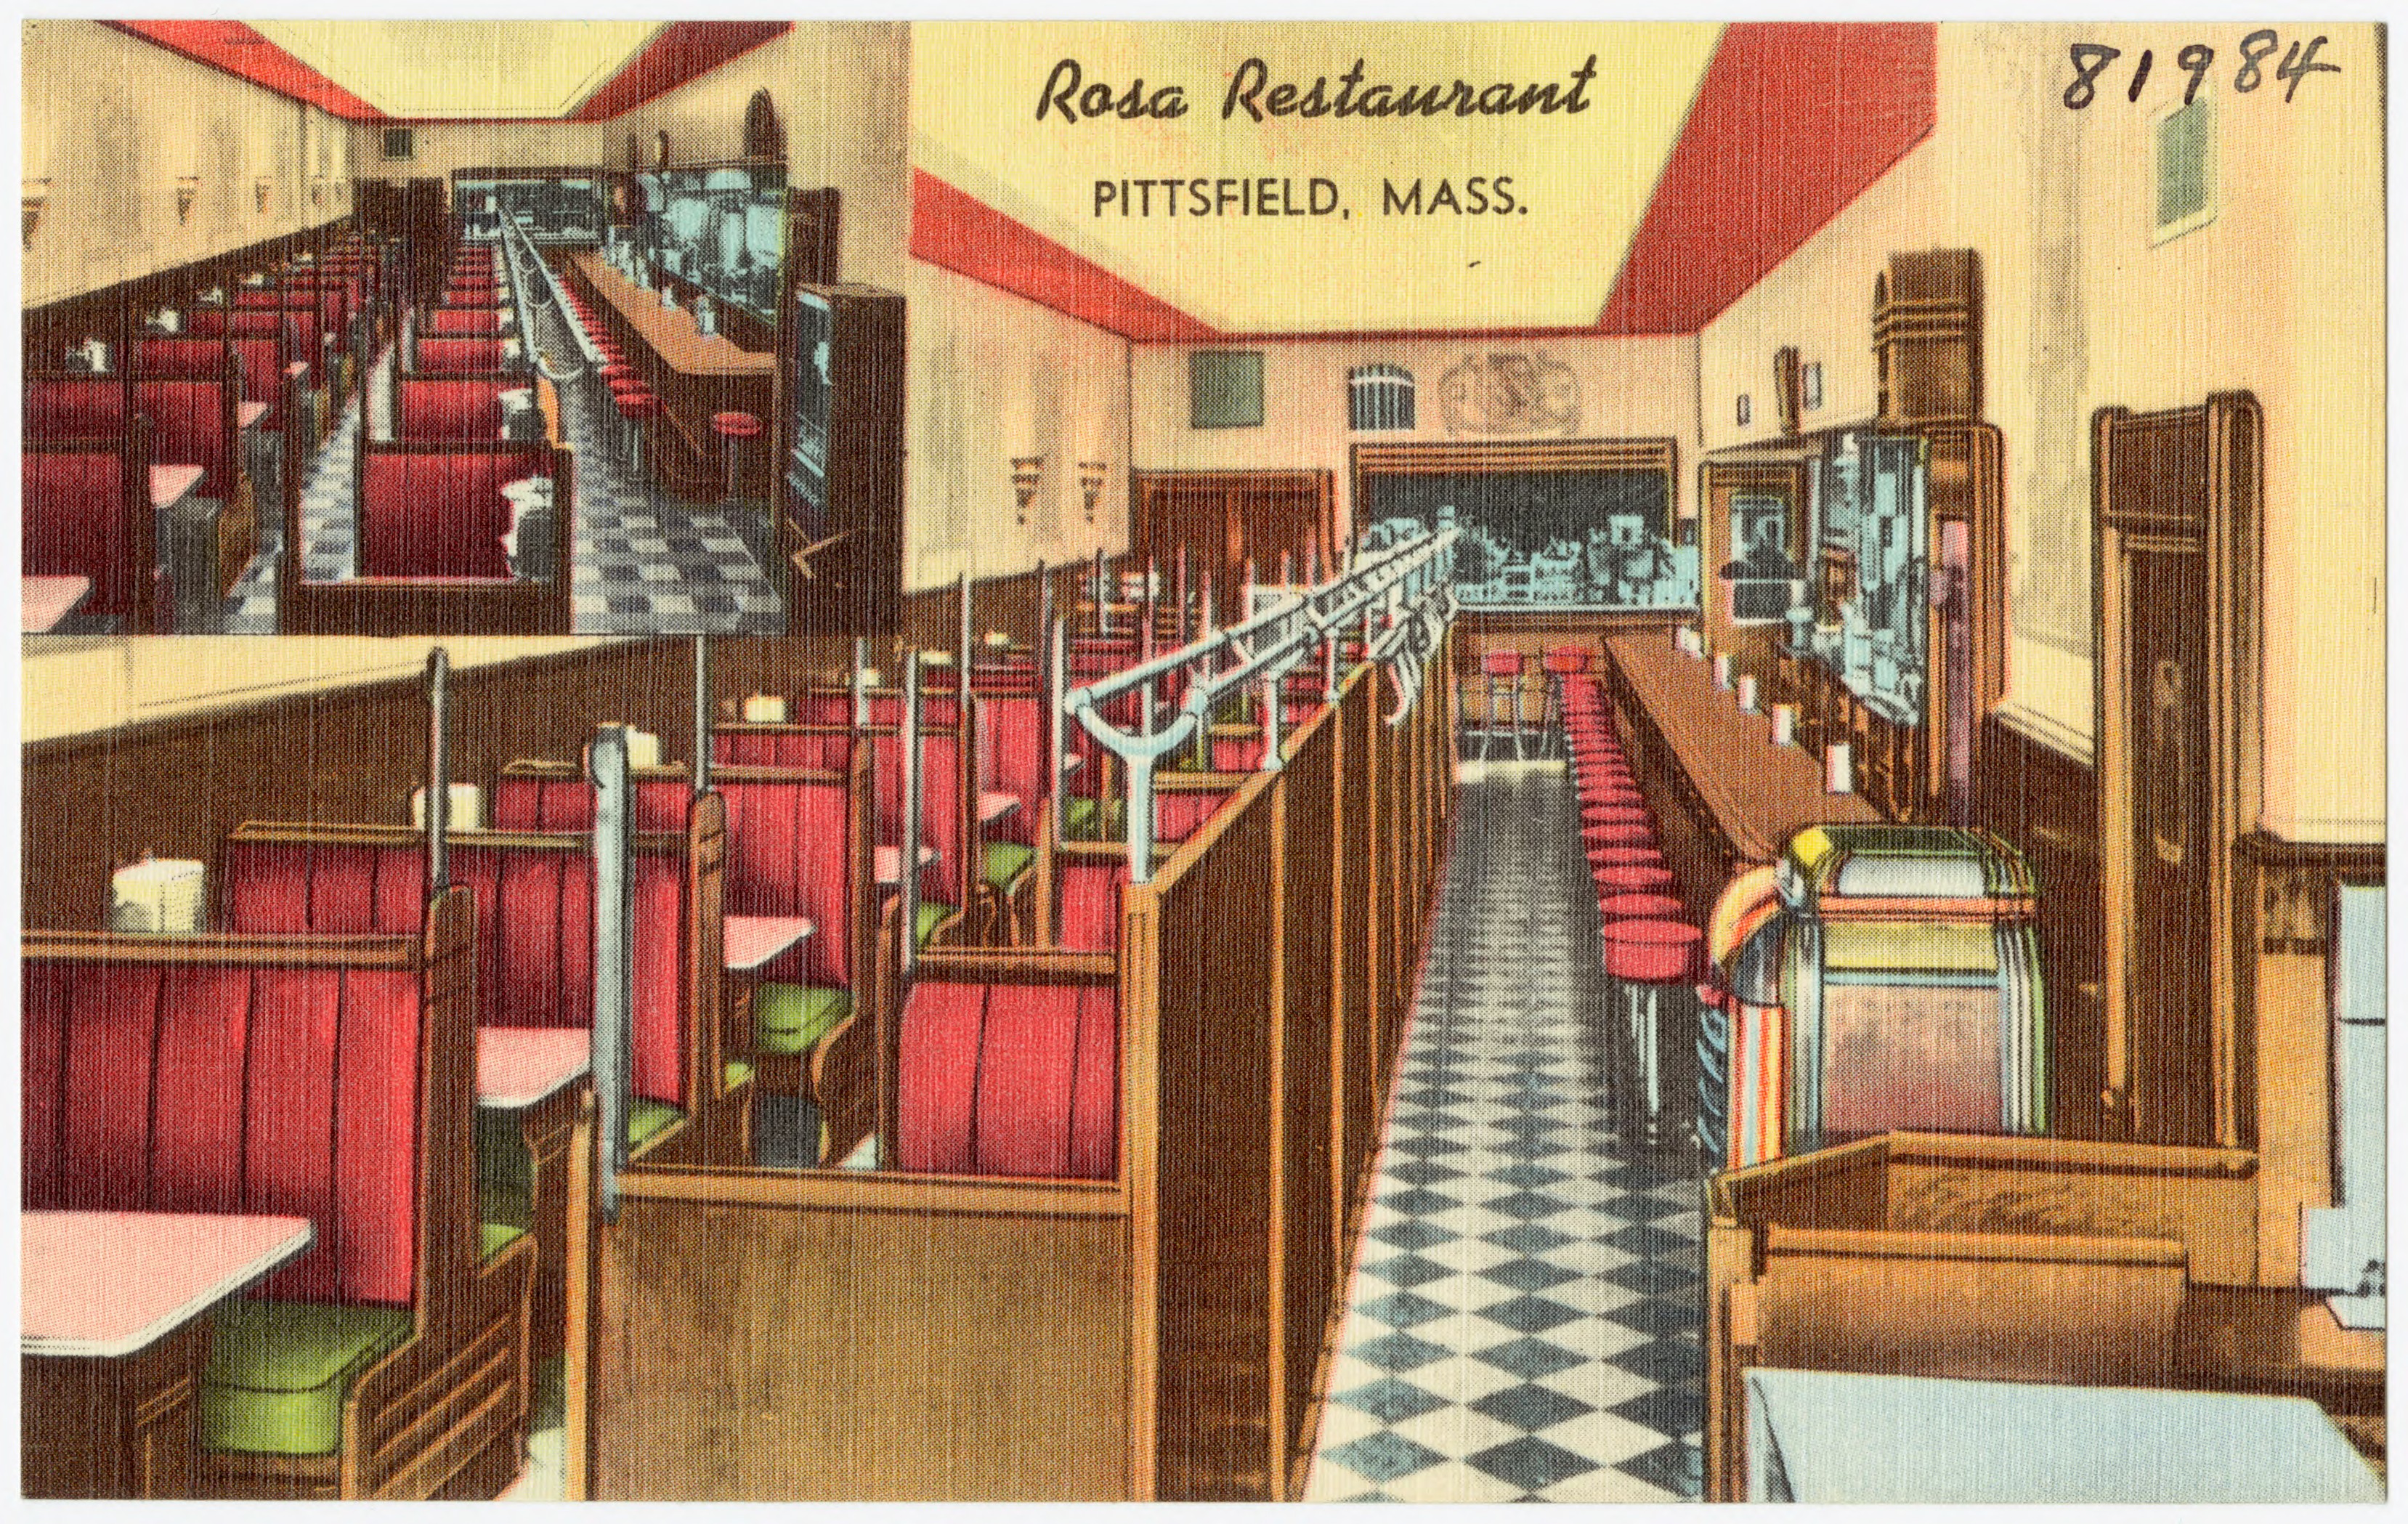 Rosa Restaurant, Pittsfield, Mass (81984).jpg.